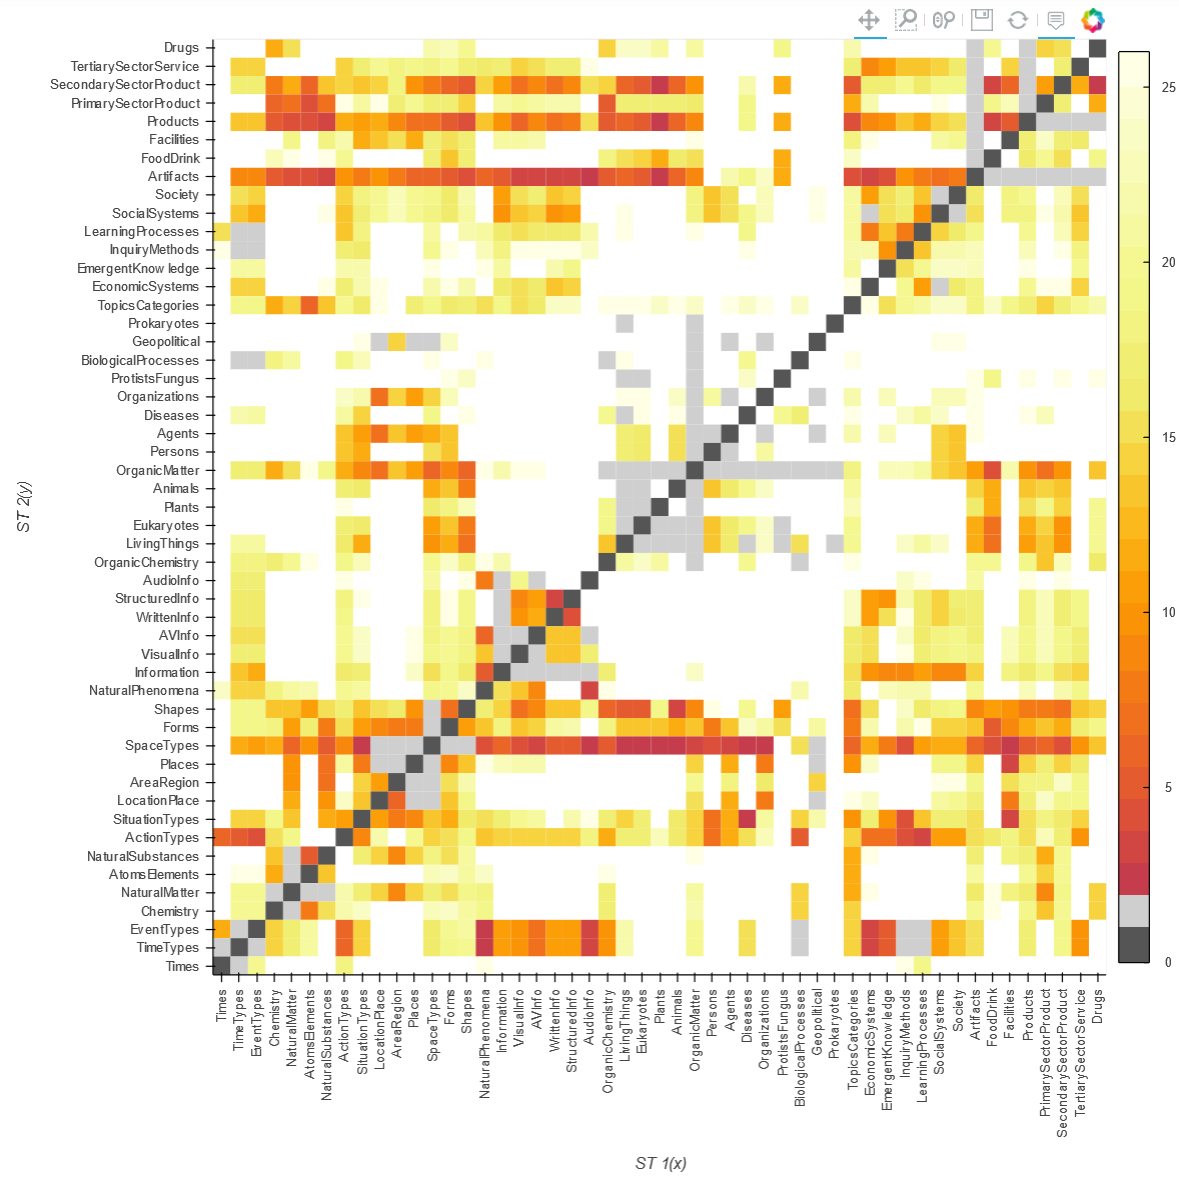 Overlap Heatmap of Shared RCs Between SuperTypes